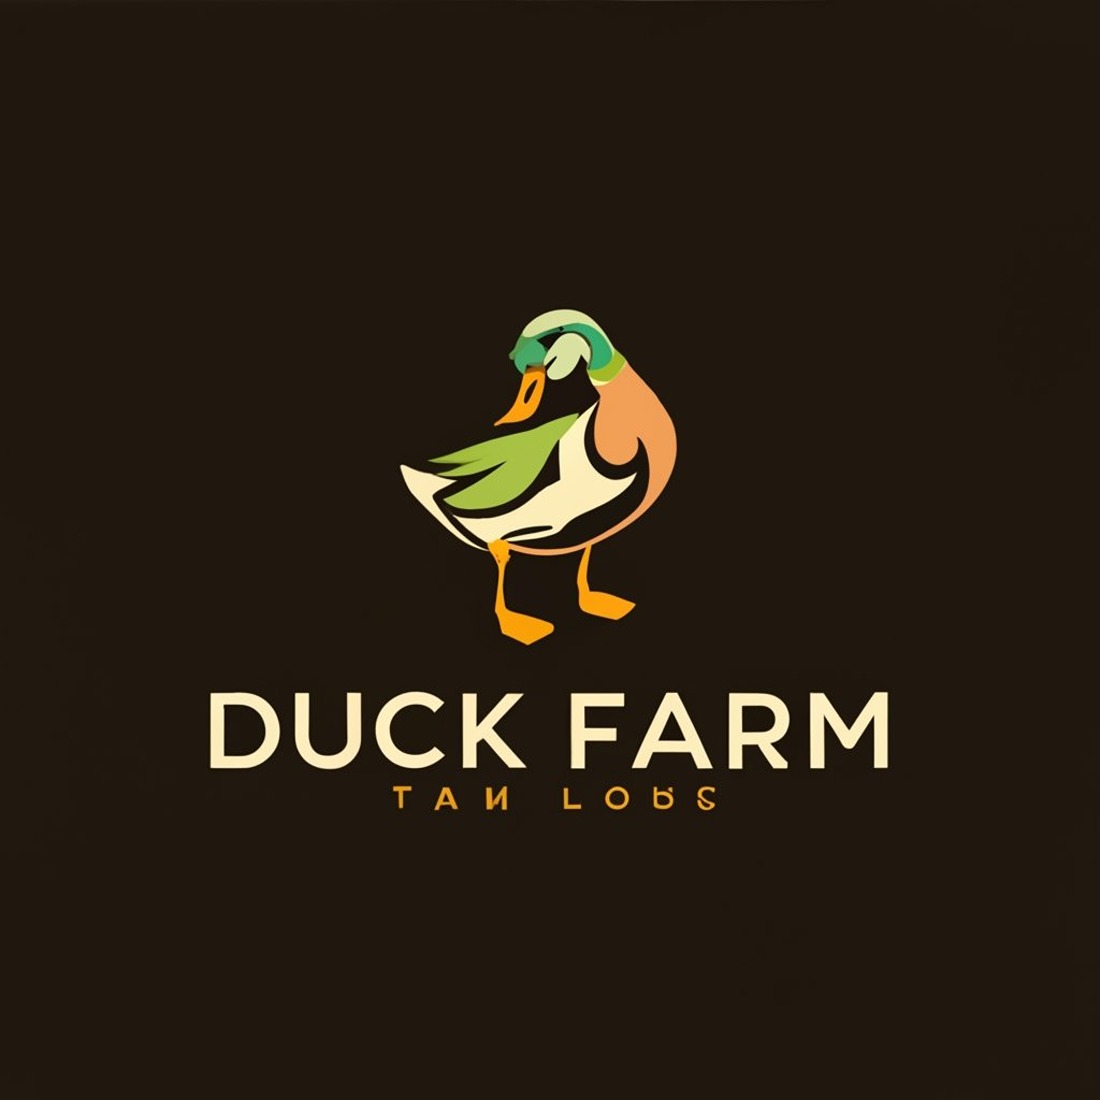 a logo for duck farm named duck farm 1 11zon 403